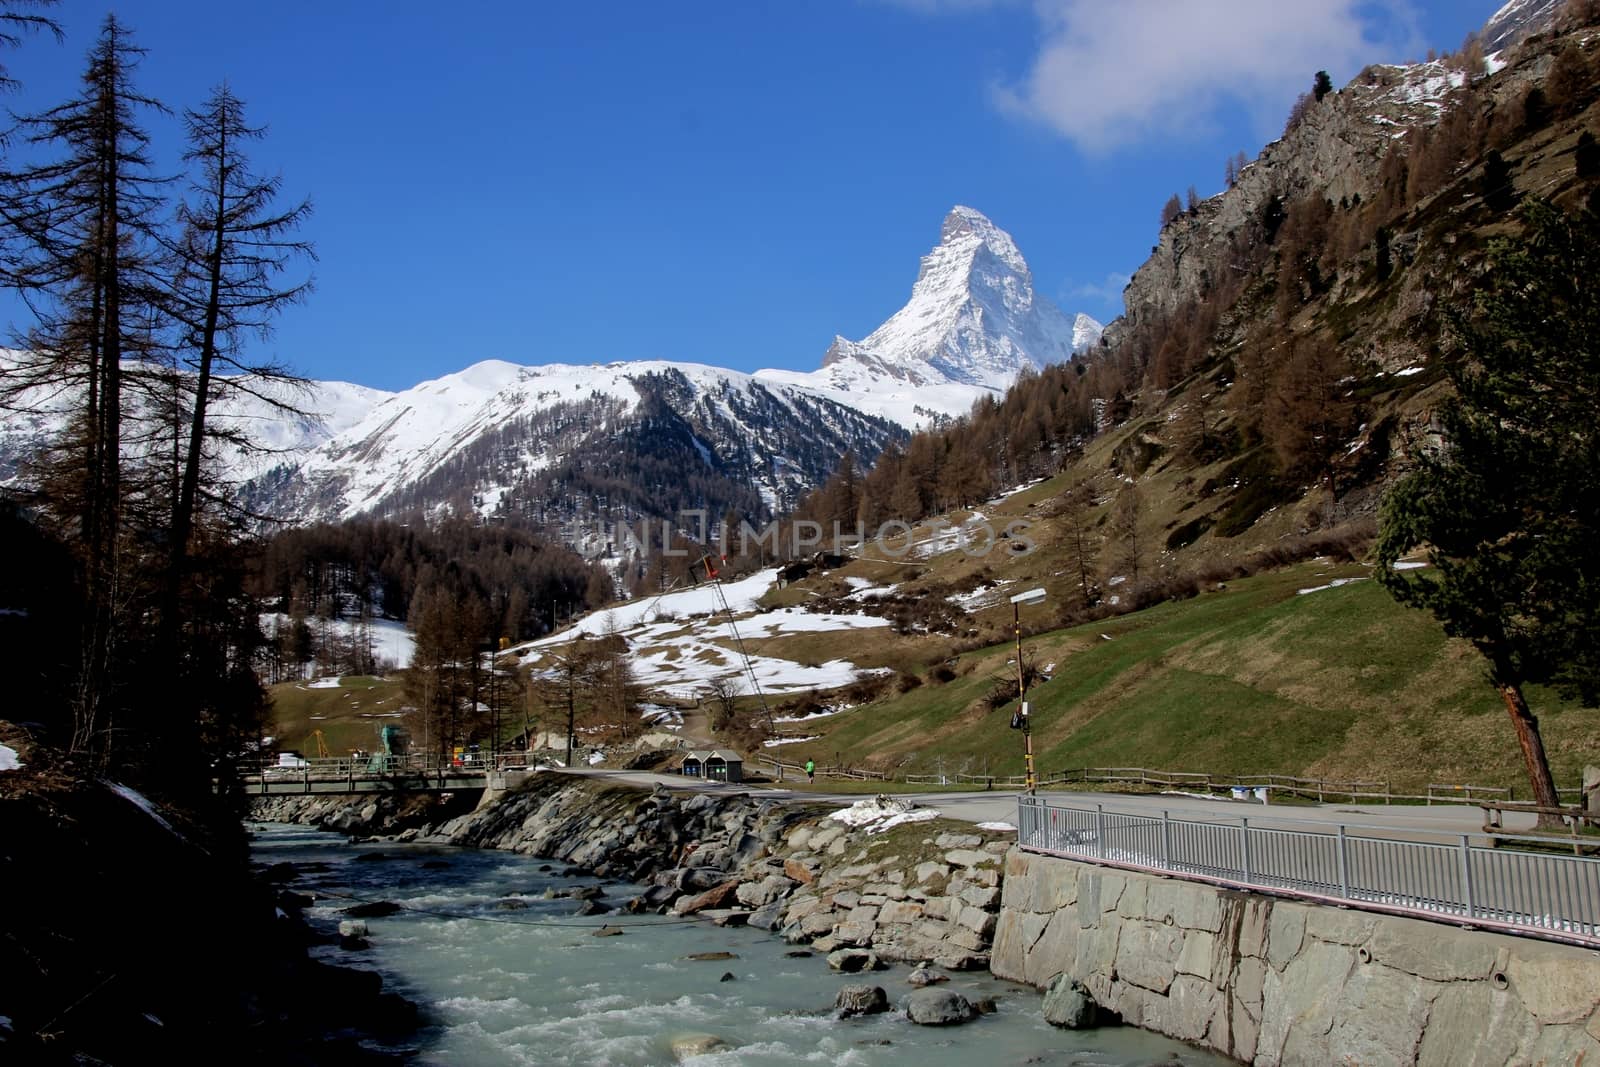 The beautiful Matterhorn in the Swiss Alps bathed in bright sunshine, from Swiss town Zermatt.